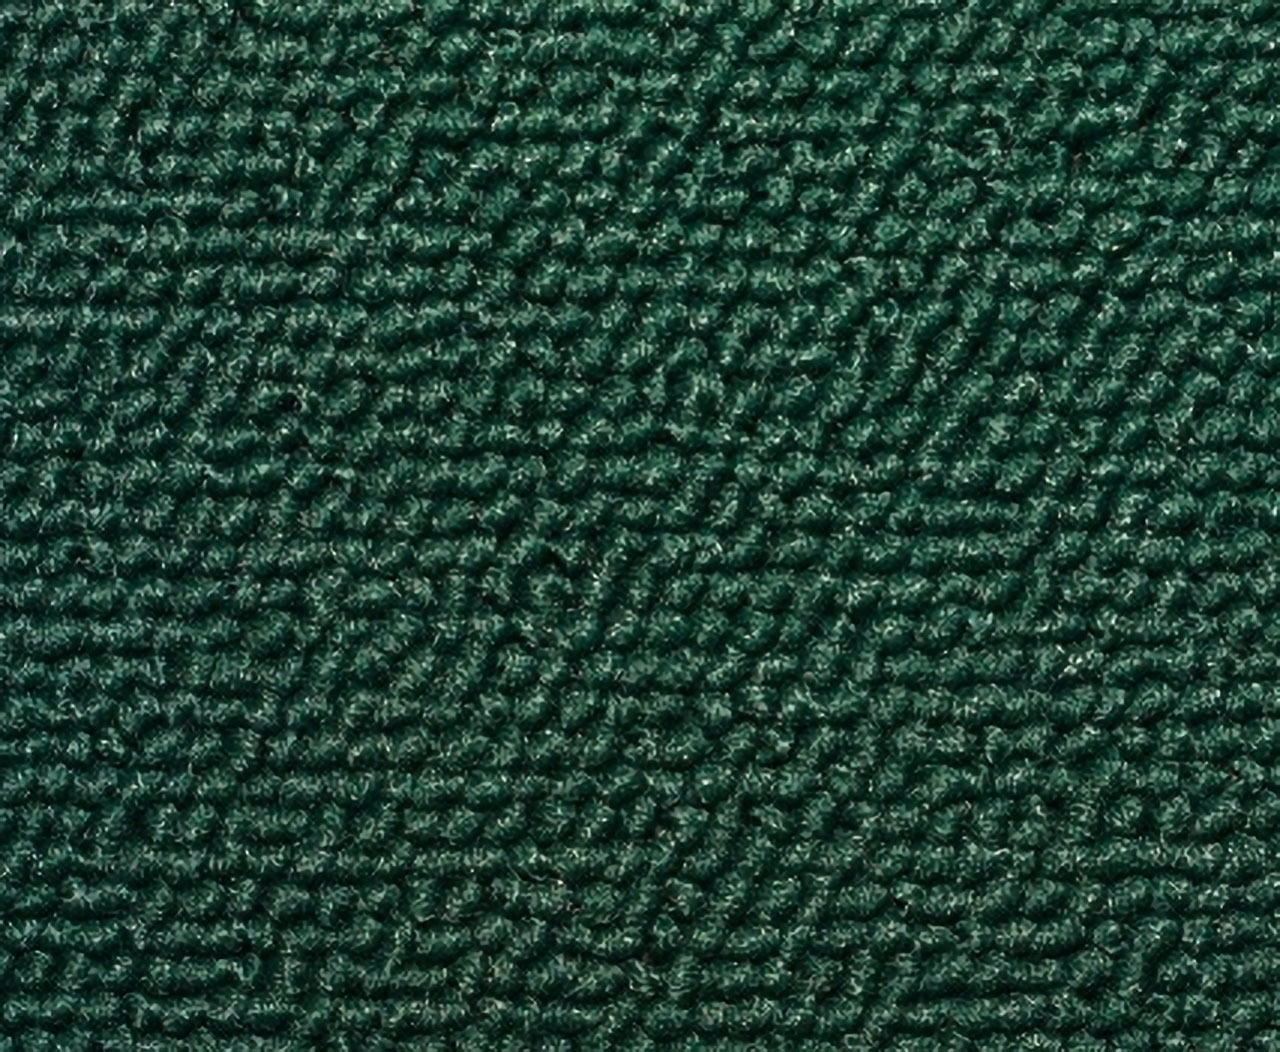 Holden Standard HD Standard Panel Van E01 Triton Green Carpet (Image 1 of 1)